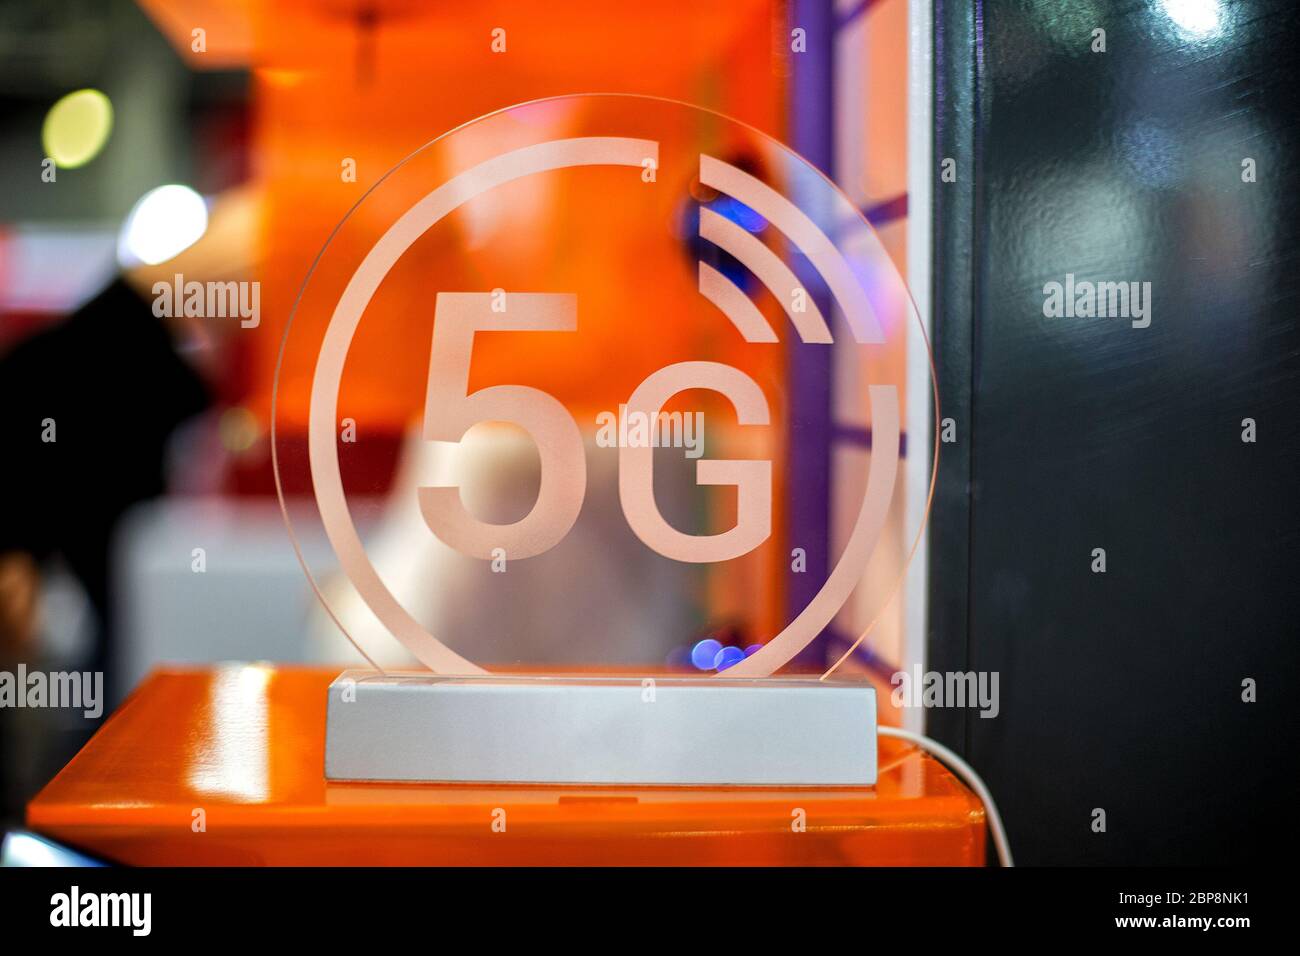 5g white icon on transparent plastics. Orange background in blur. close up, front view Stock Photo